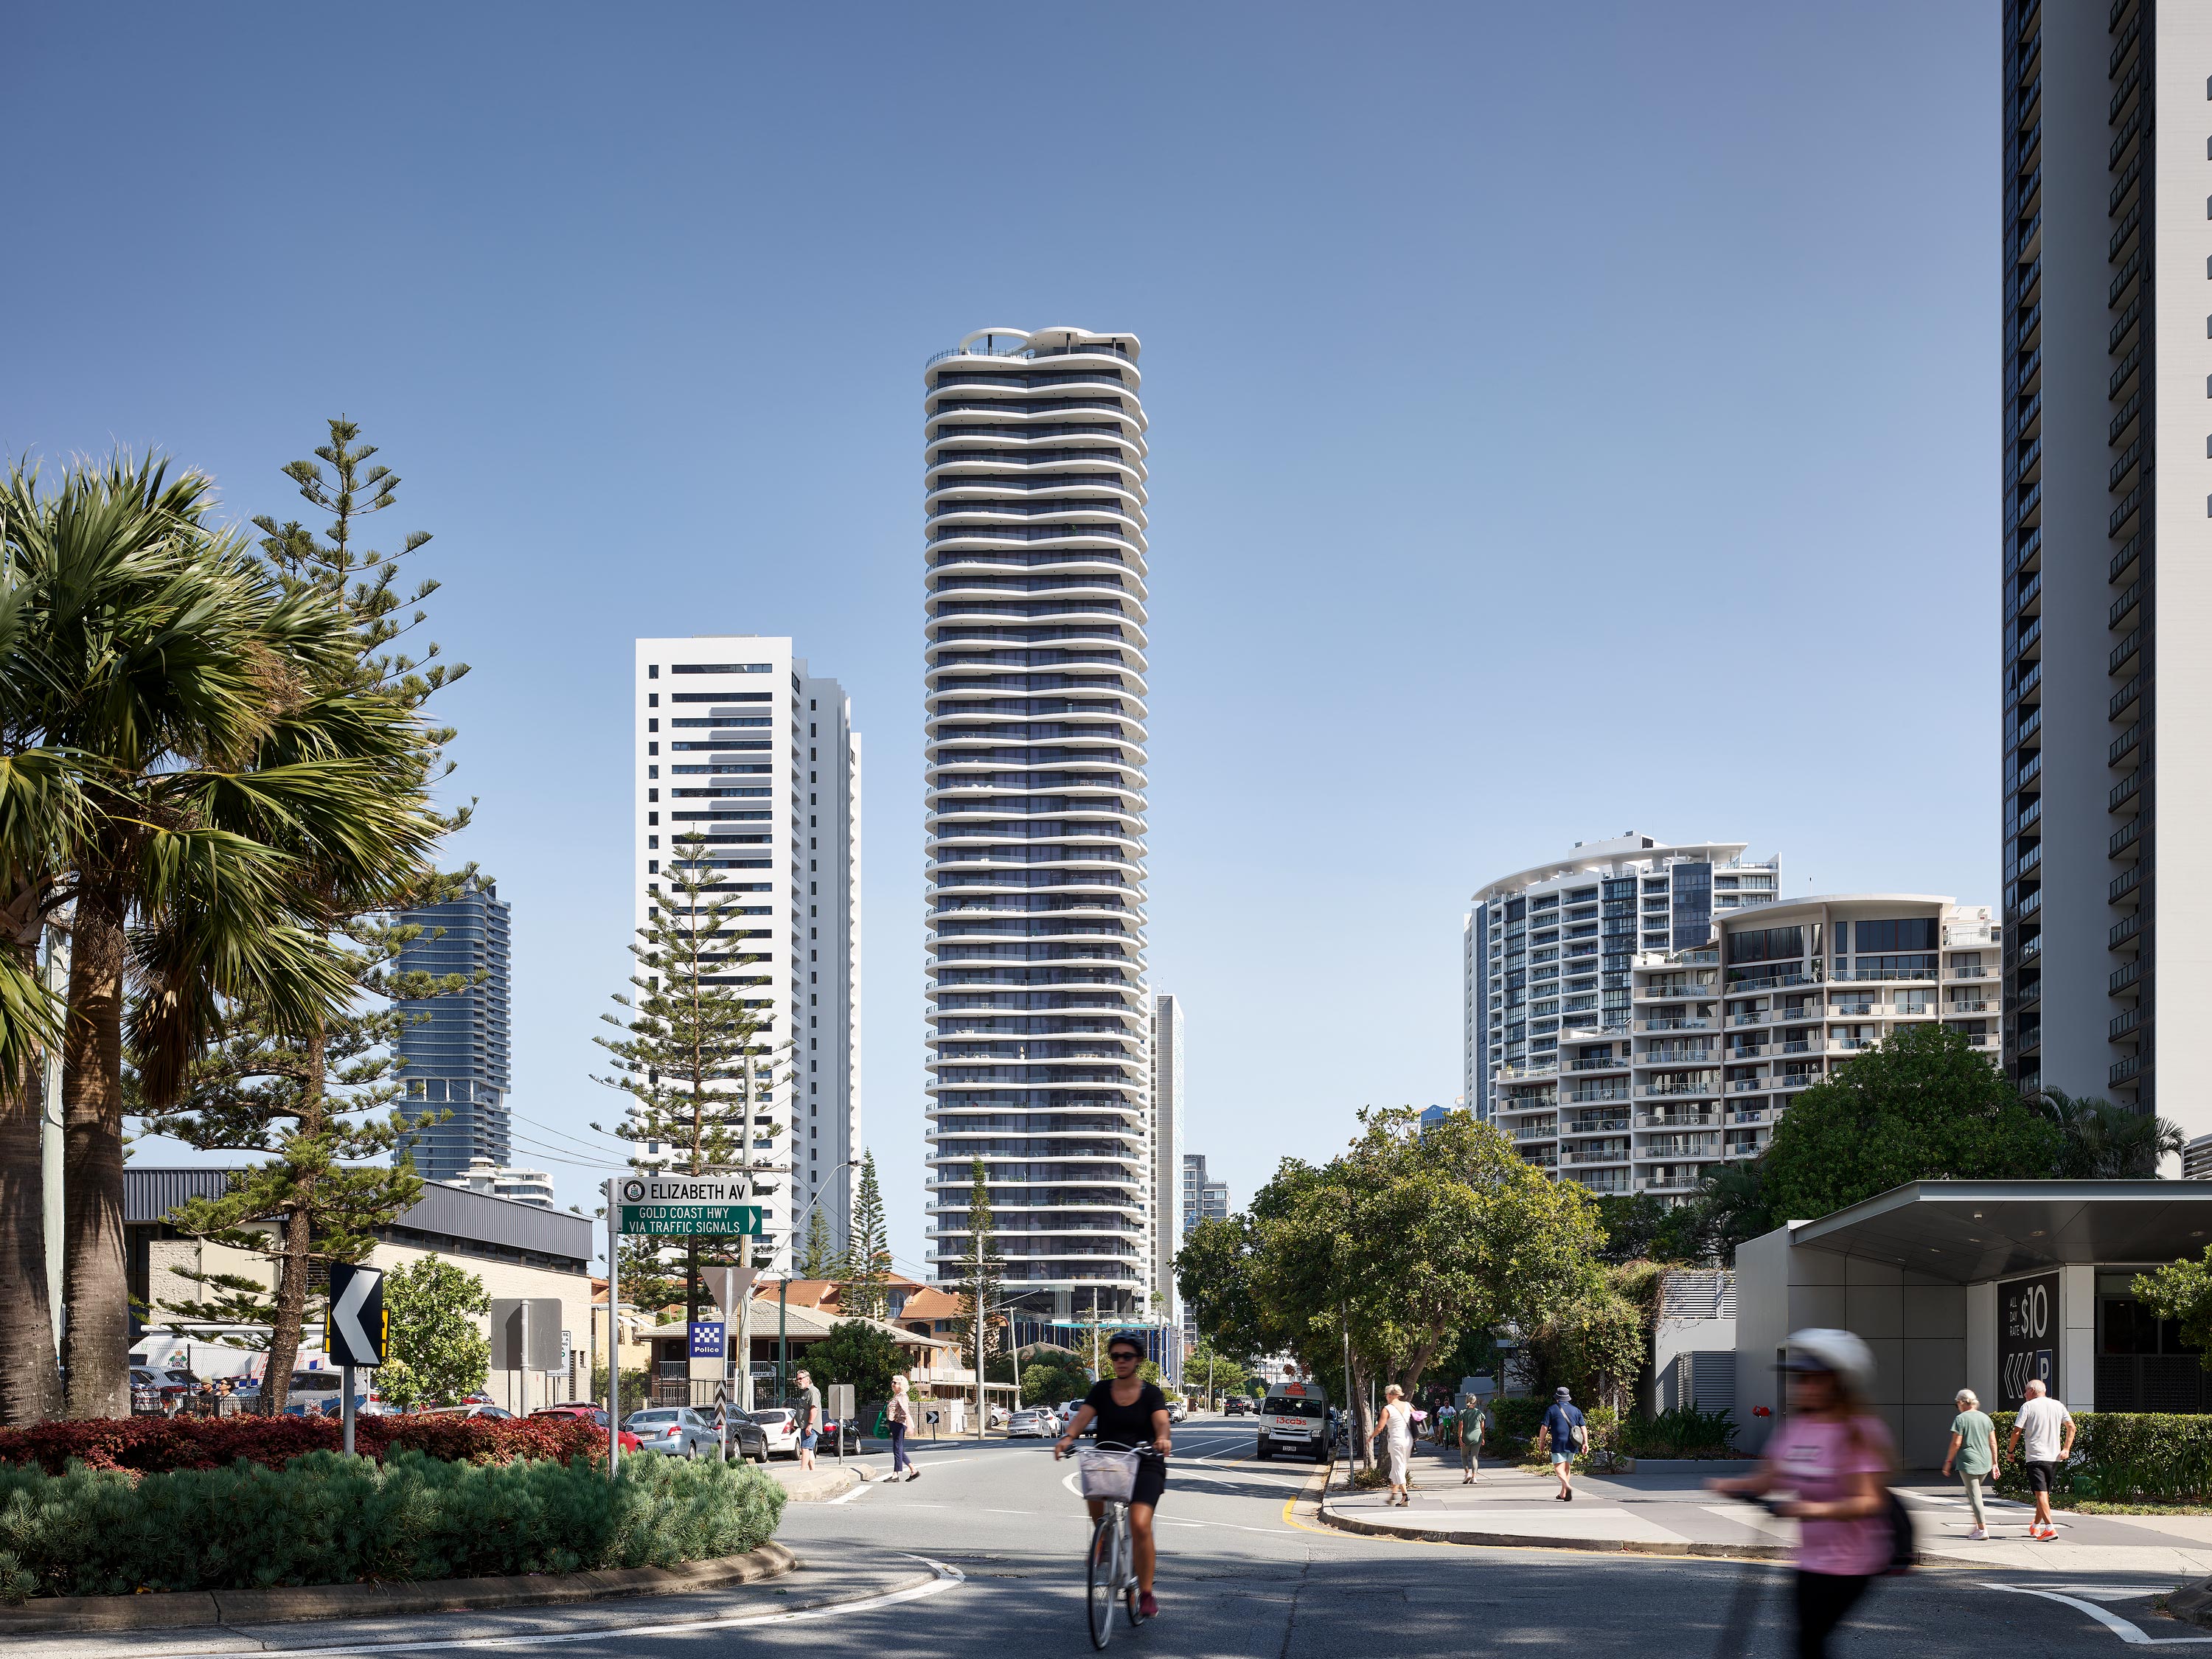 Infinity - BDA Architecture - Gold Coast, Queensland